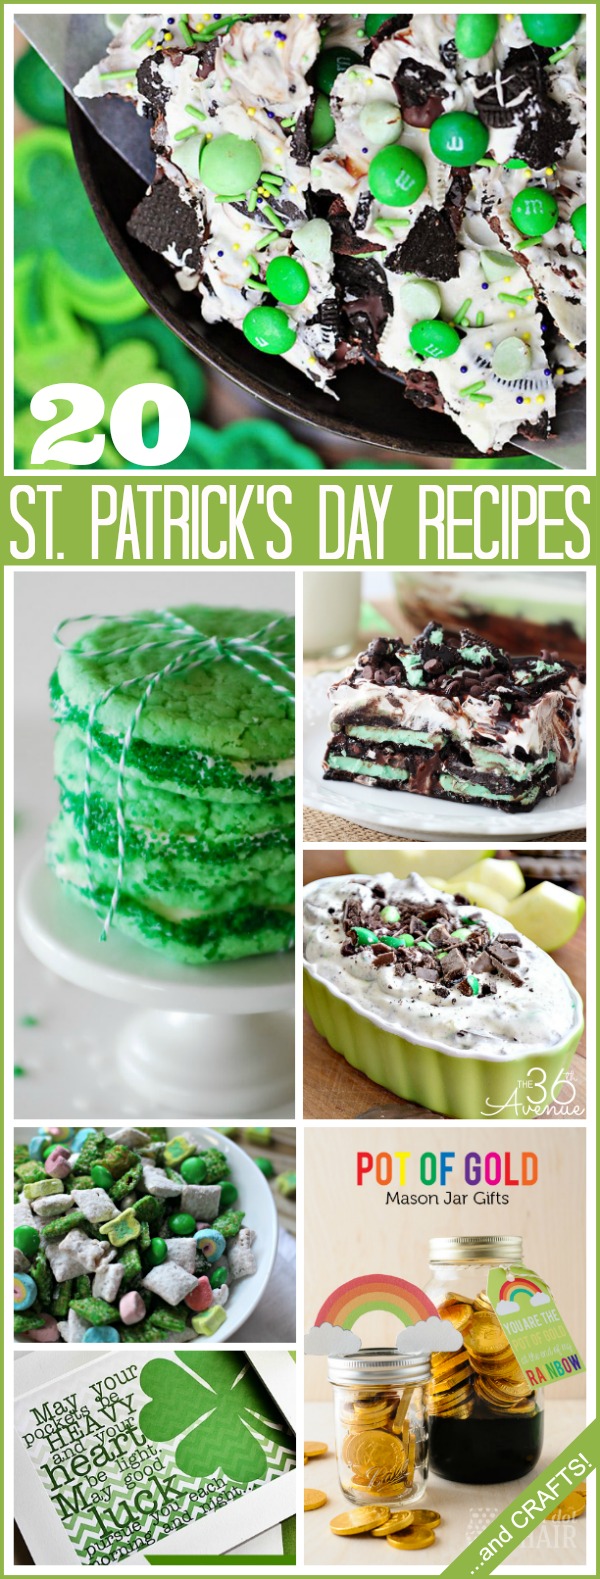 St. Patrick's Day Recipes the36thavenue.com